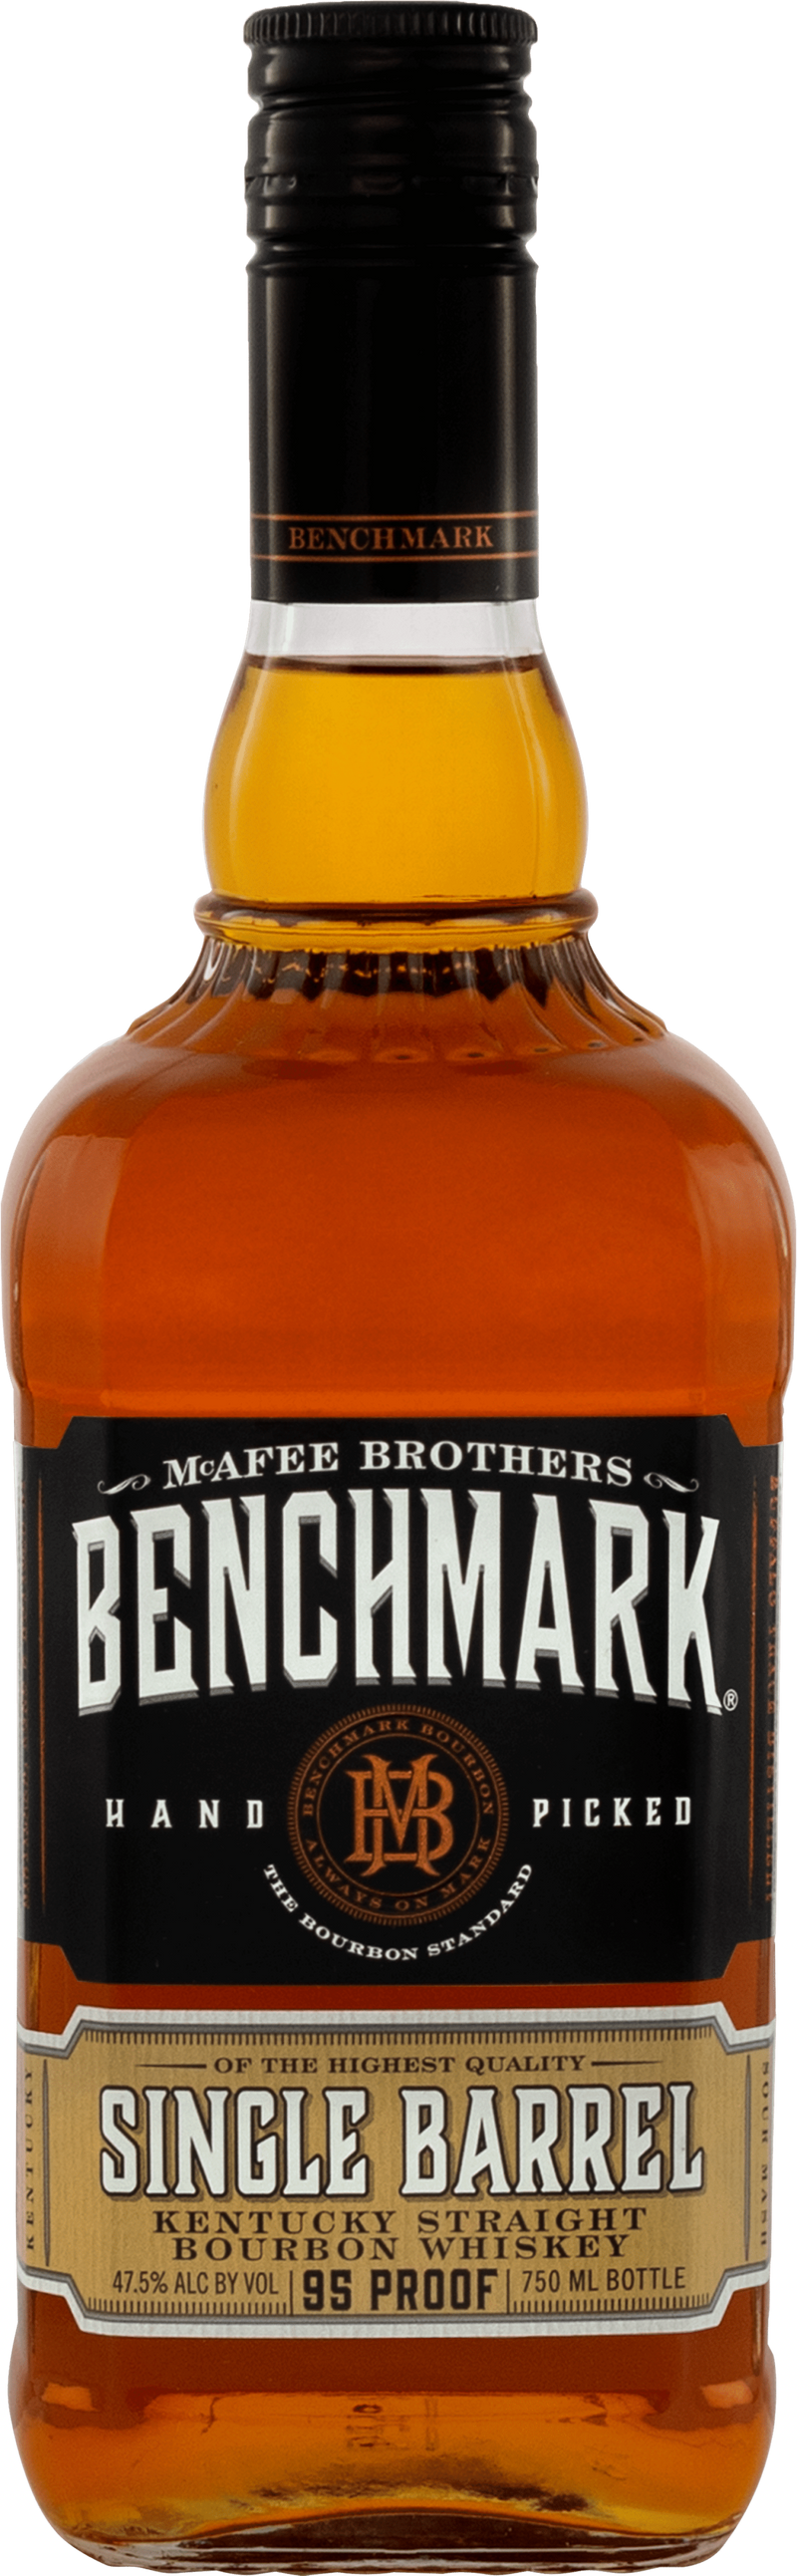 Benchmark Single Barrel Bourbon Whiskey